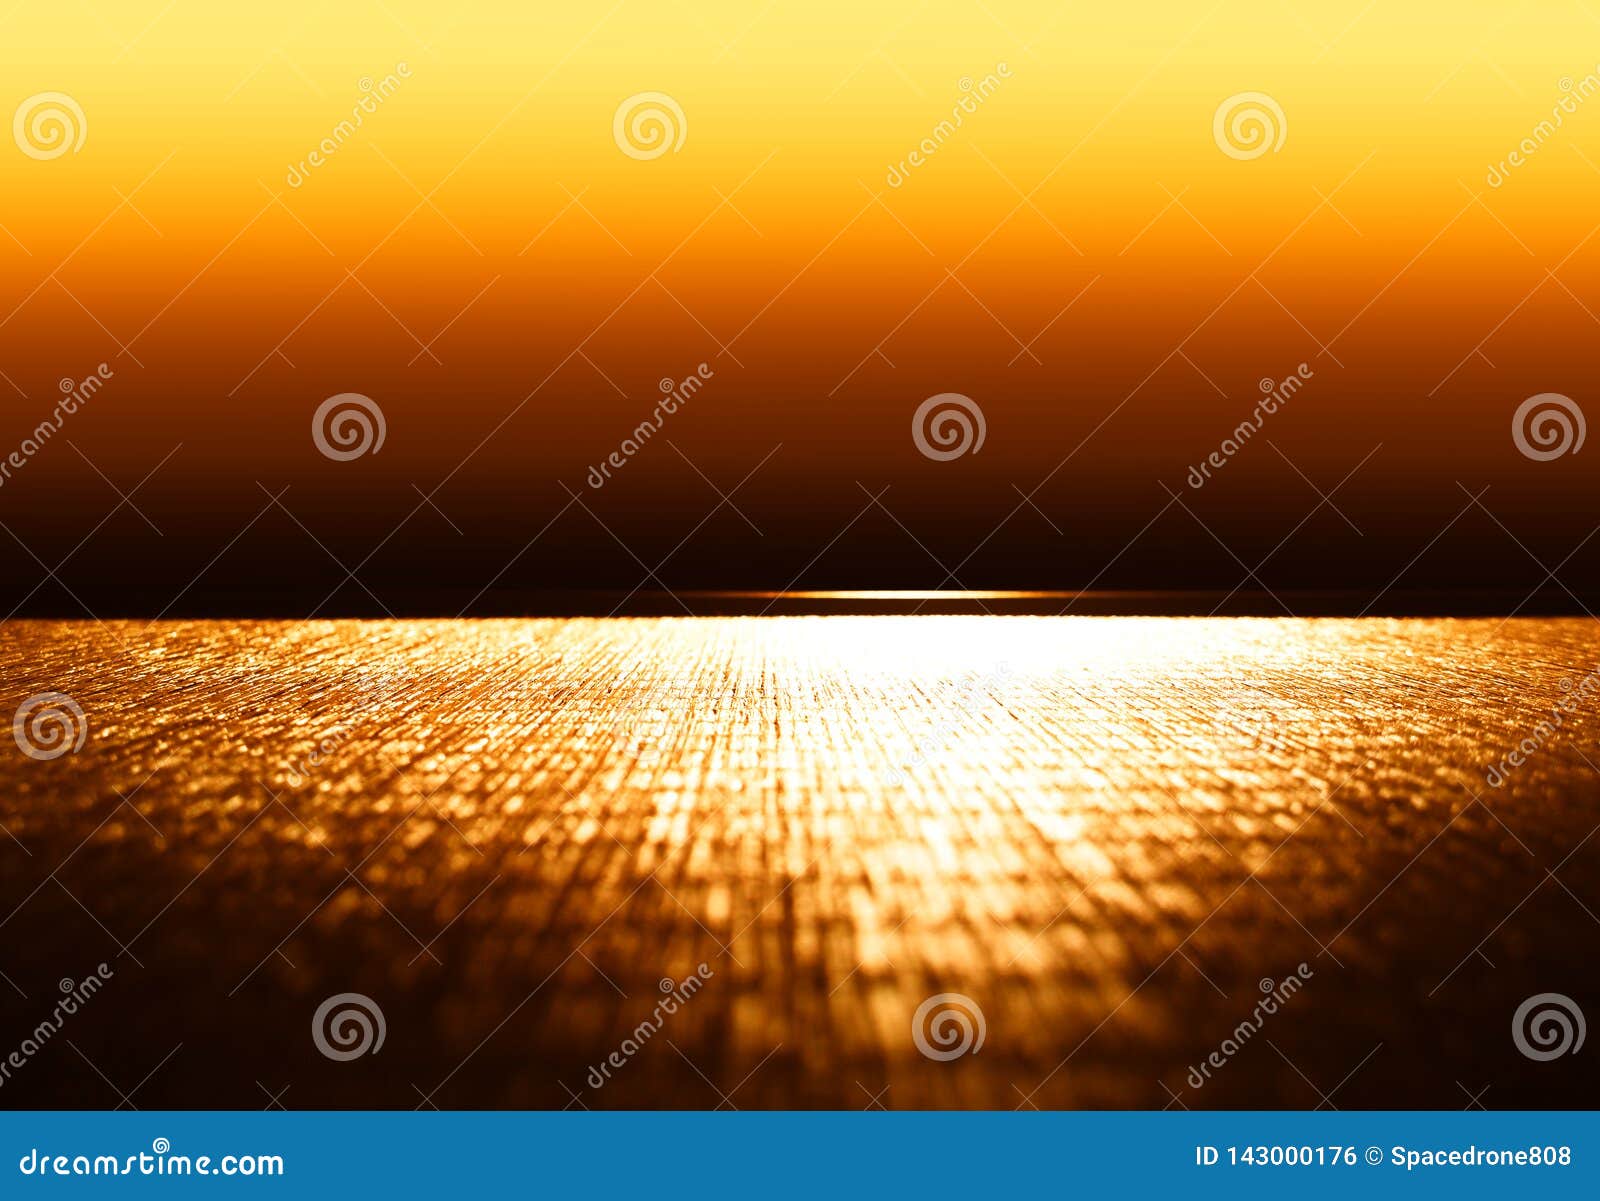 Blank Eastern Wooden Cafe Table Background Stock Photo Image Of Orange Background